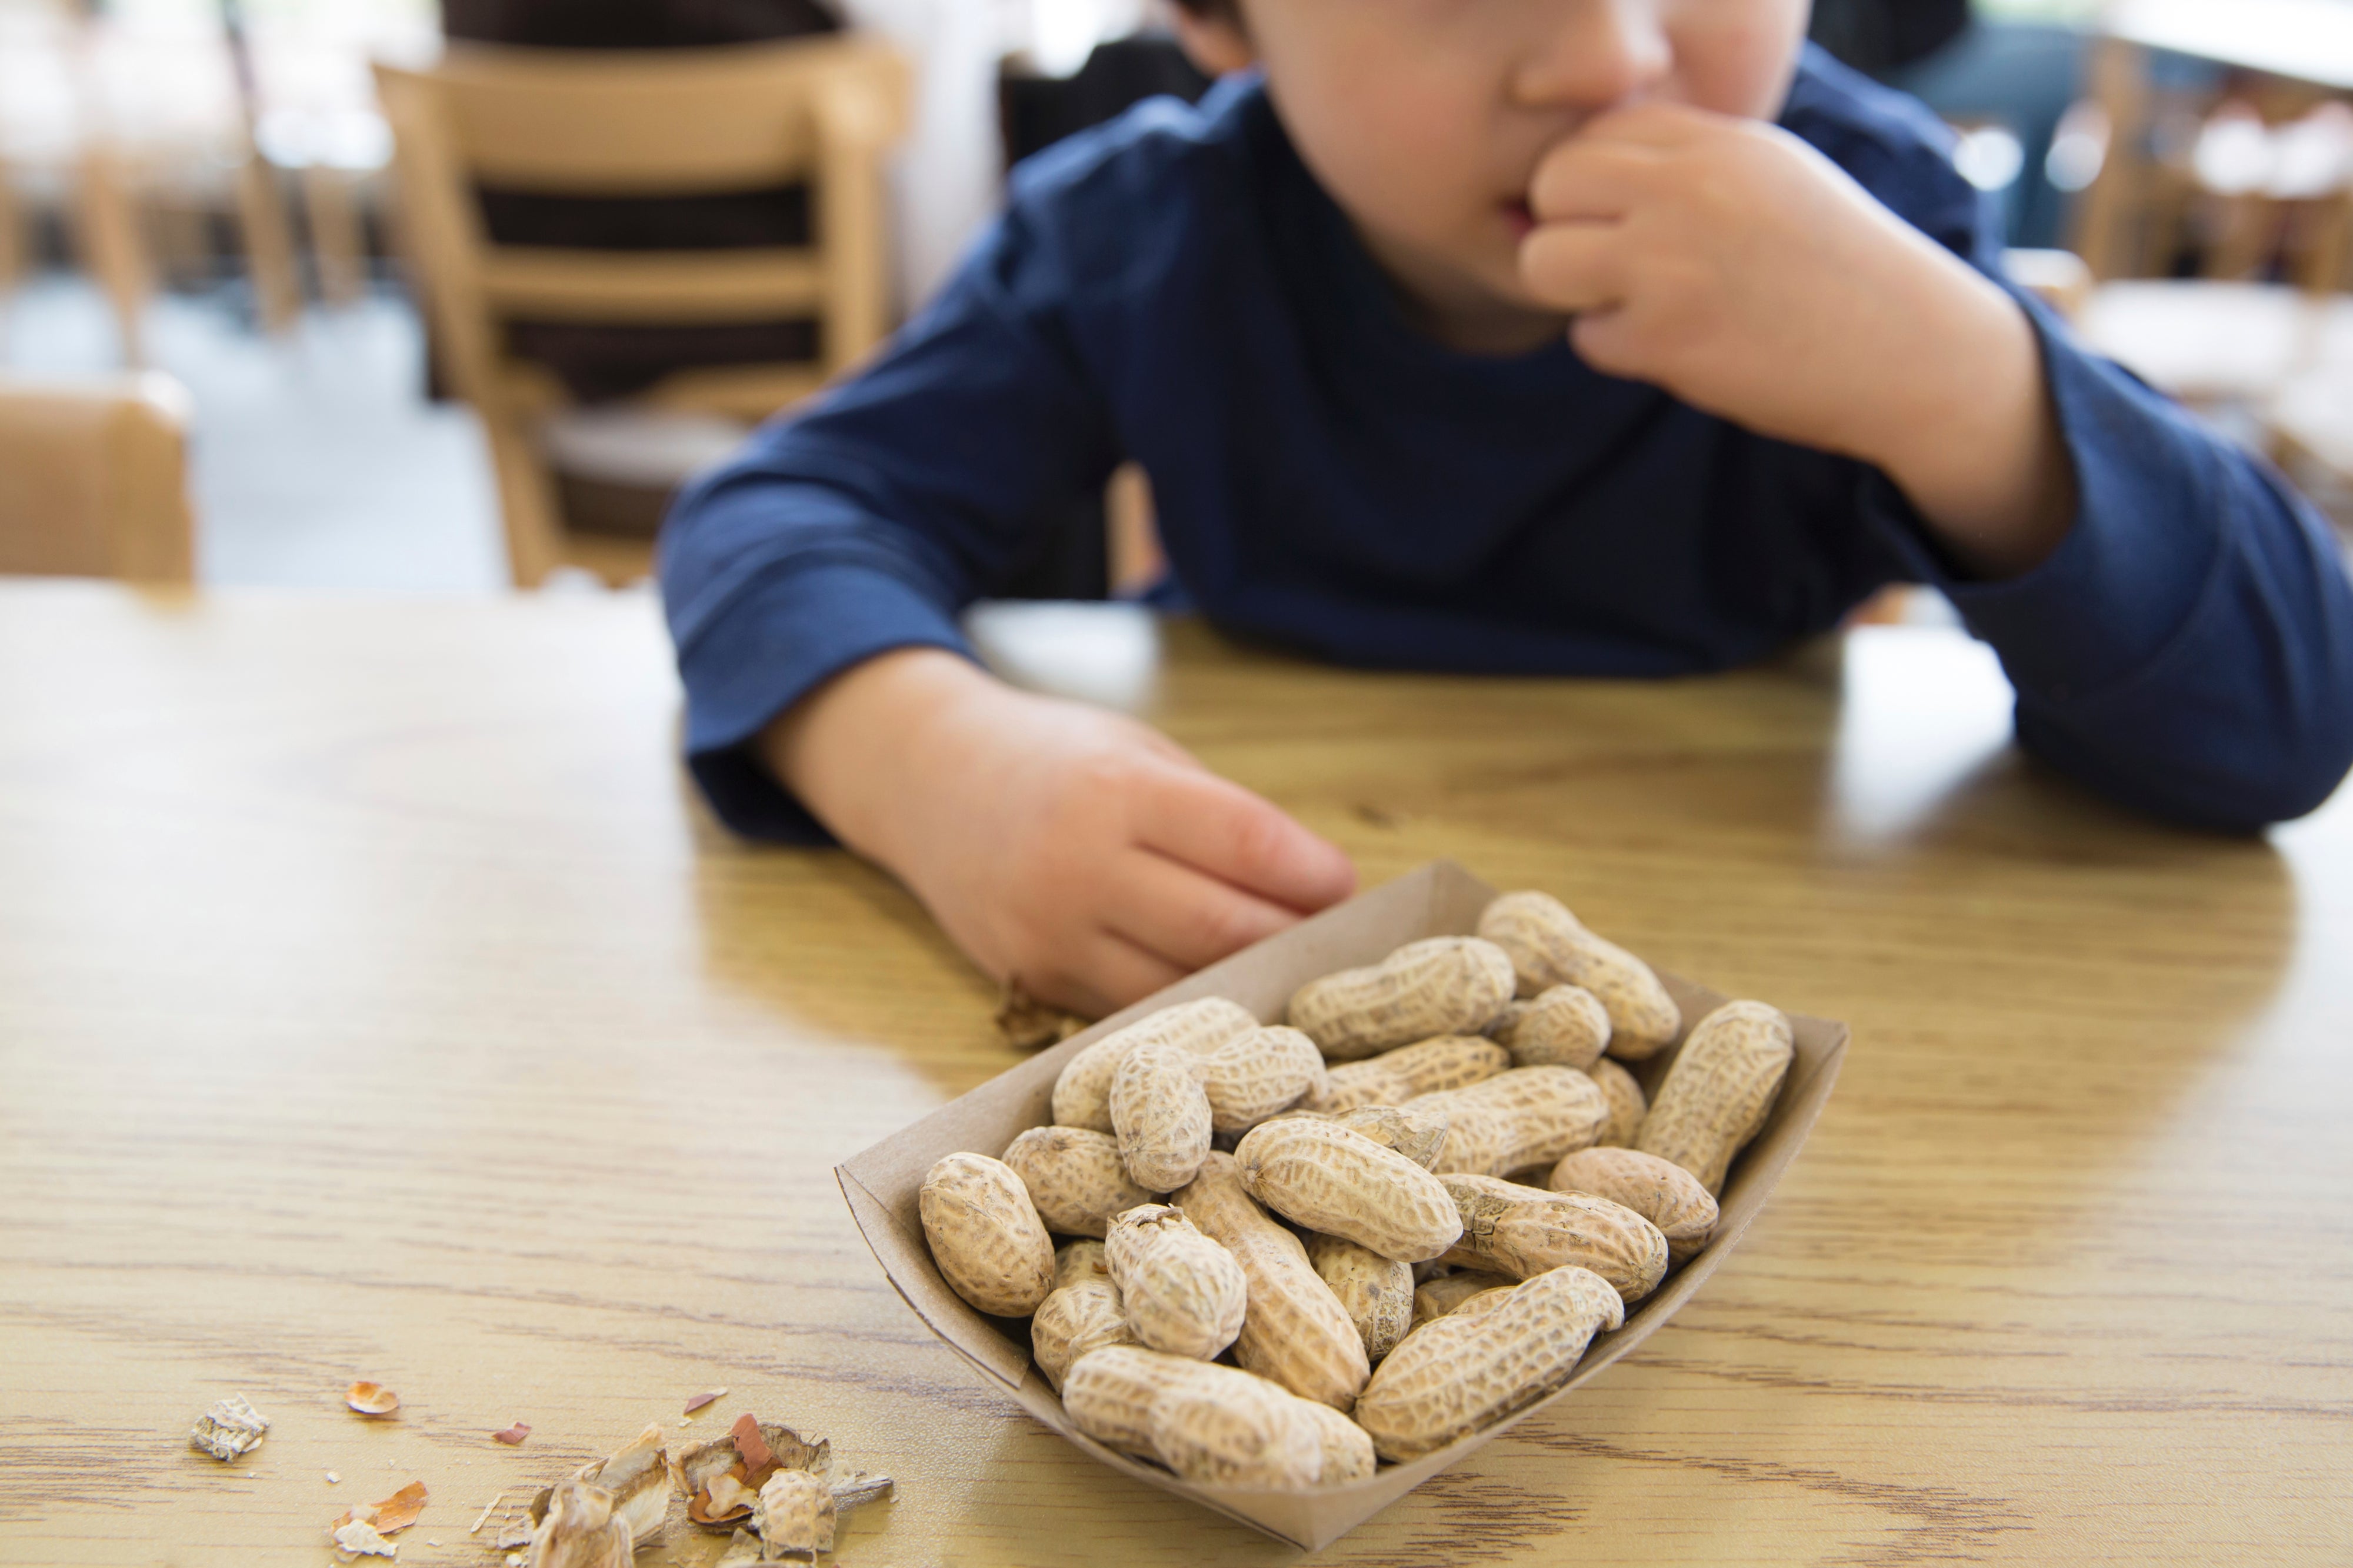 Should More Kids Eat Nuts? - Scientific American